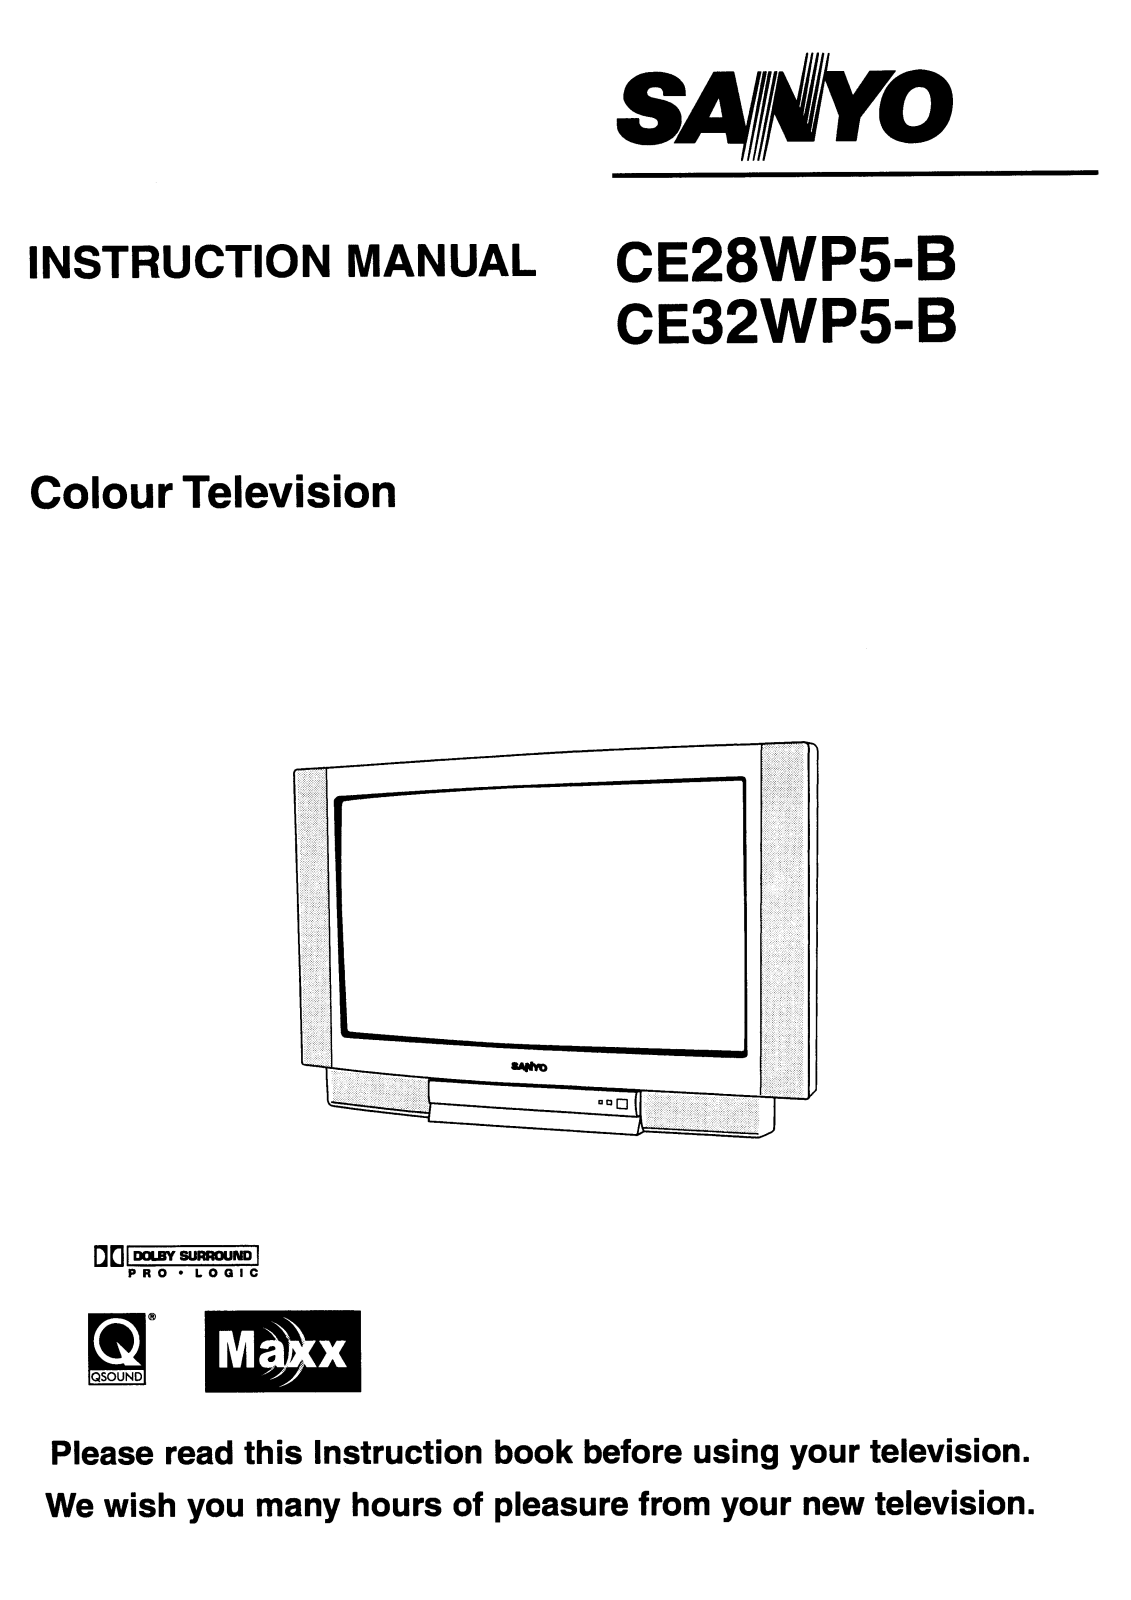 Sanyo CE32WP5-B Instruction Manual